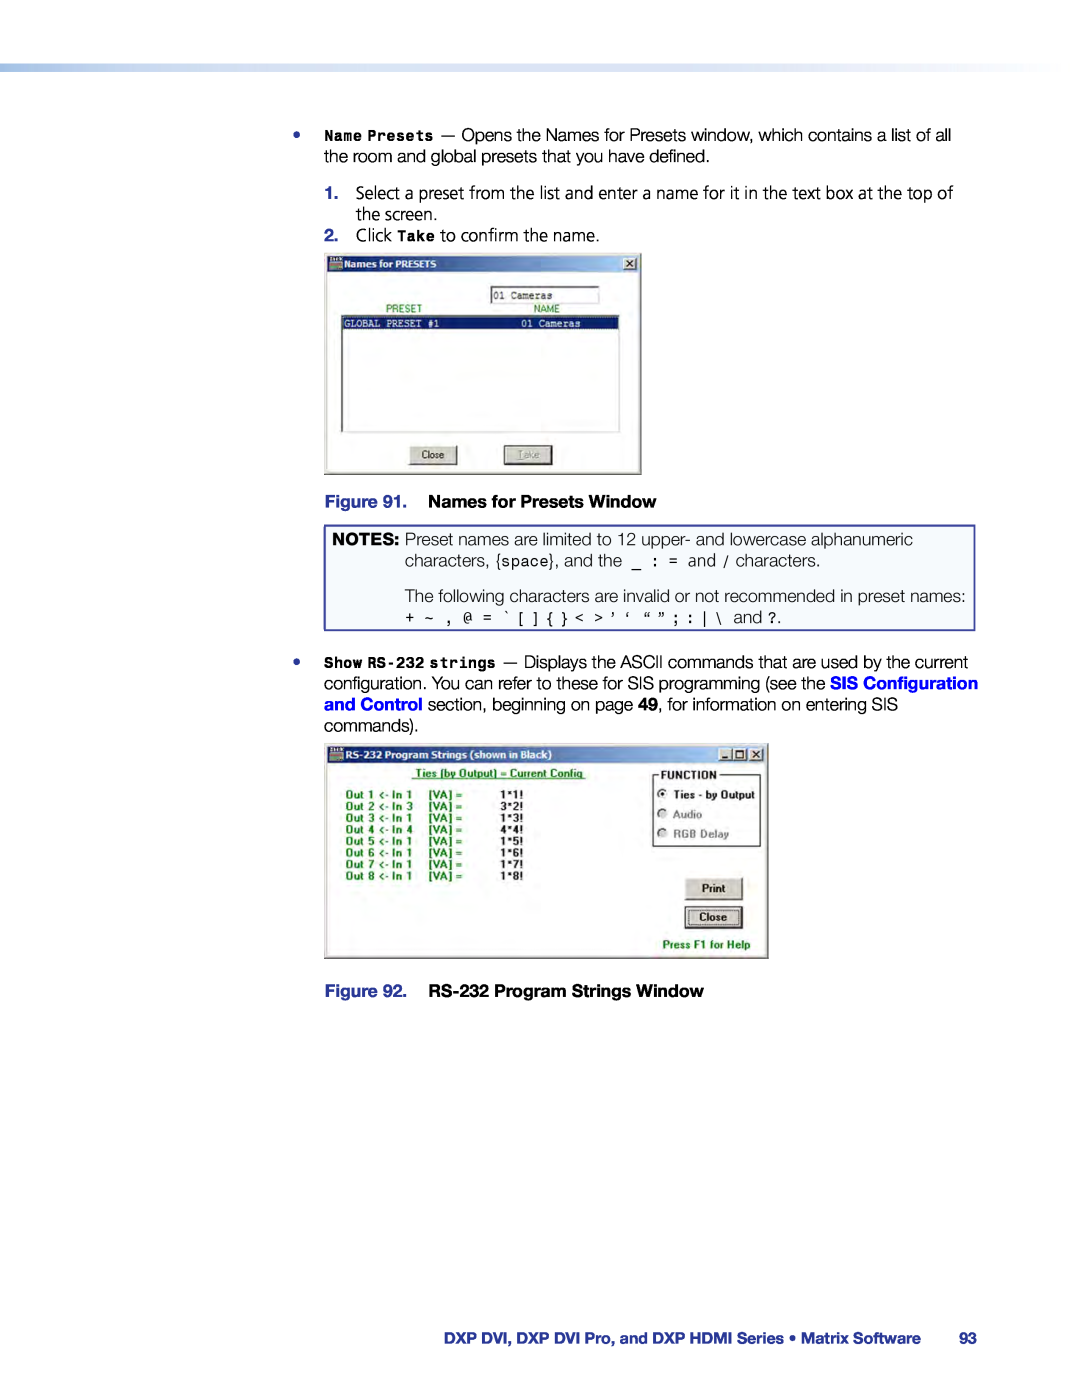 Extron electronic DXP DVI PRO manual Names for Presets Window, RS-232 Program Strings Window 